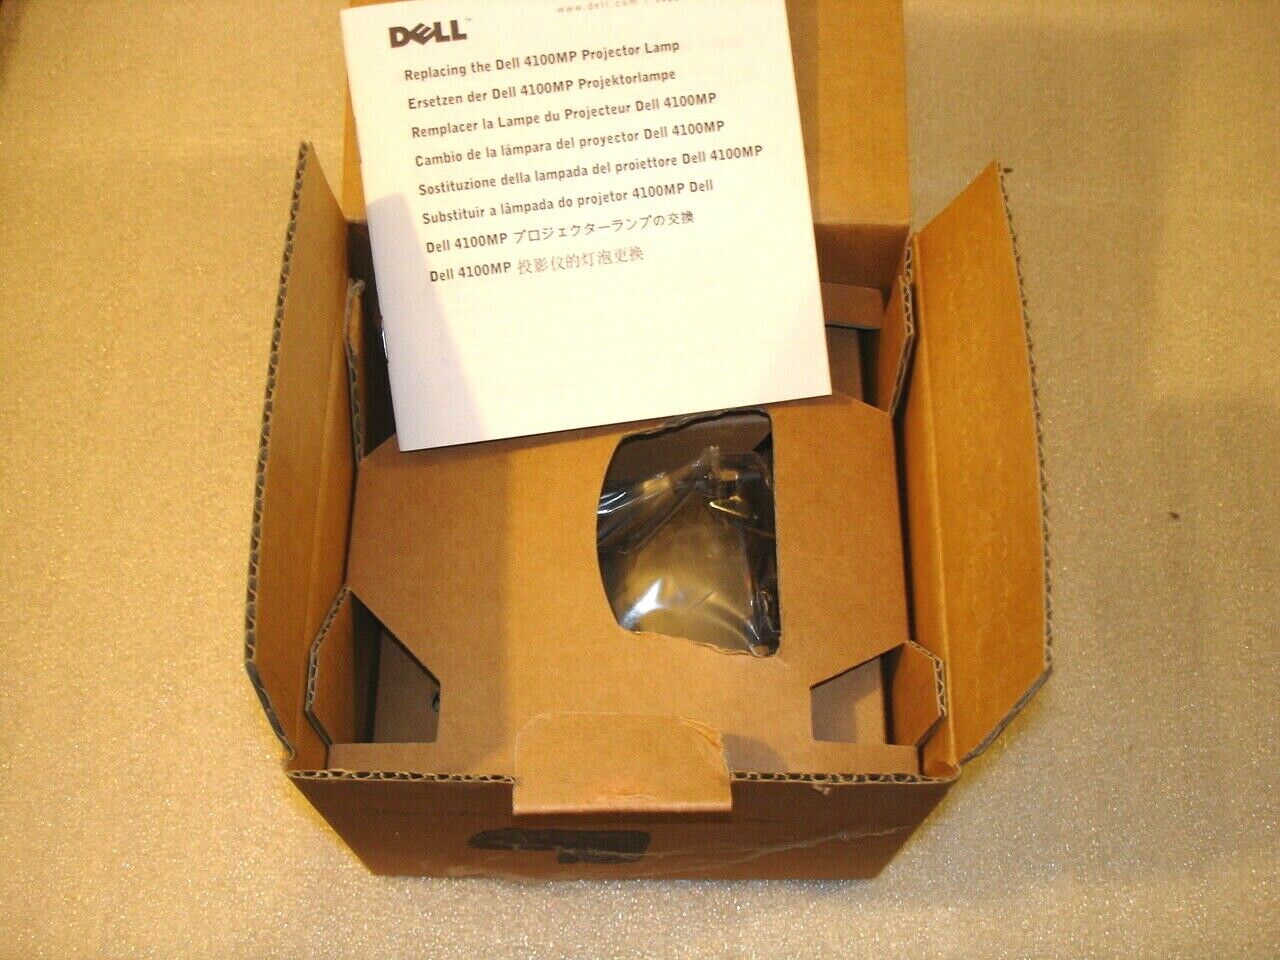 Dell 4100MP Audio Video Computer Projector OEM Lamp Part No: DP/N OP3310